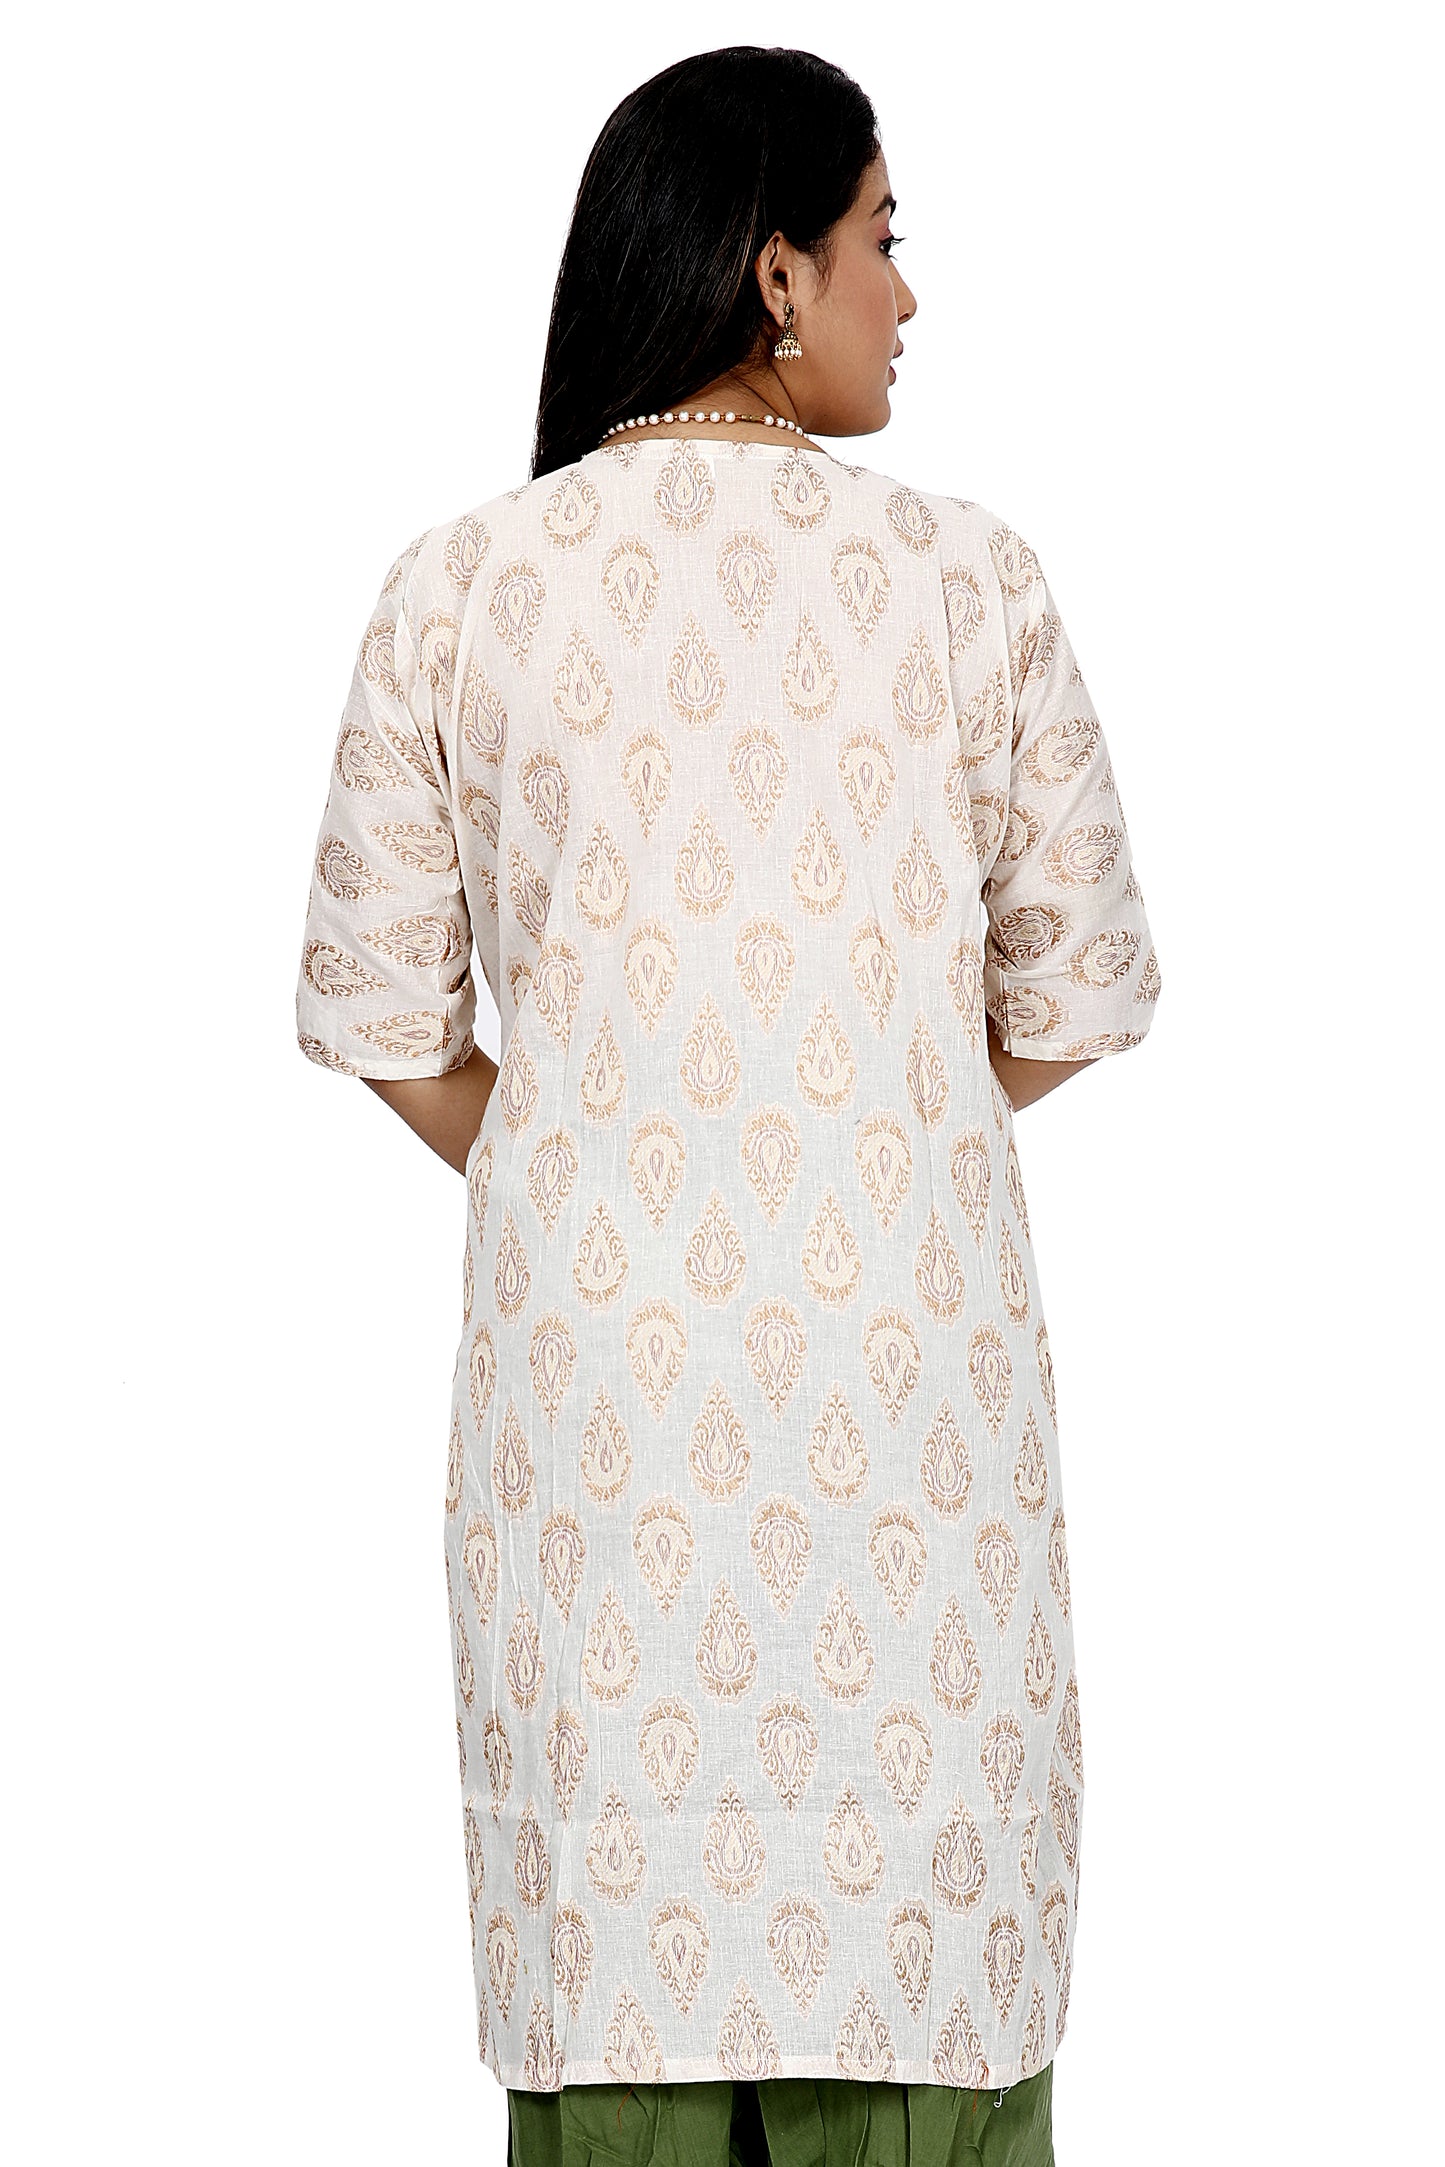 Cream embroidered  Cotton Salwar kameez Dress  Size 46